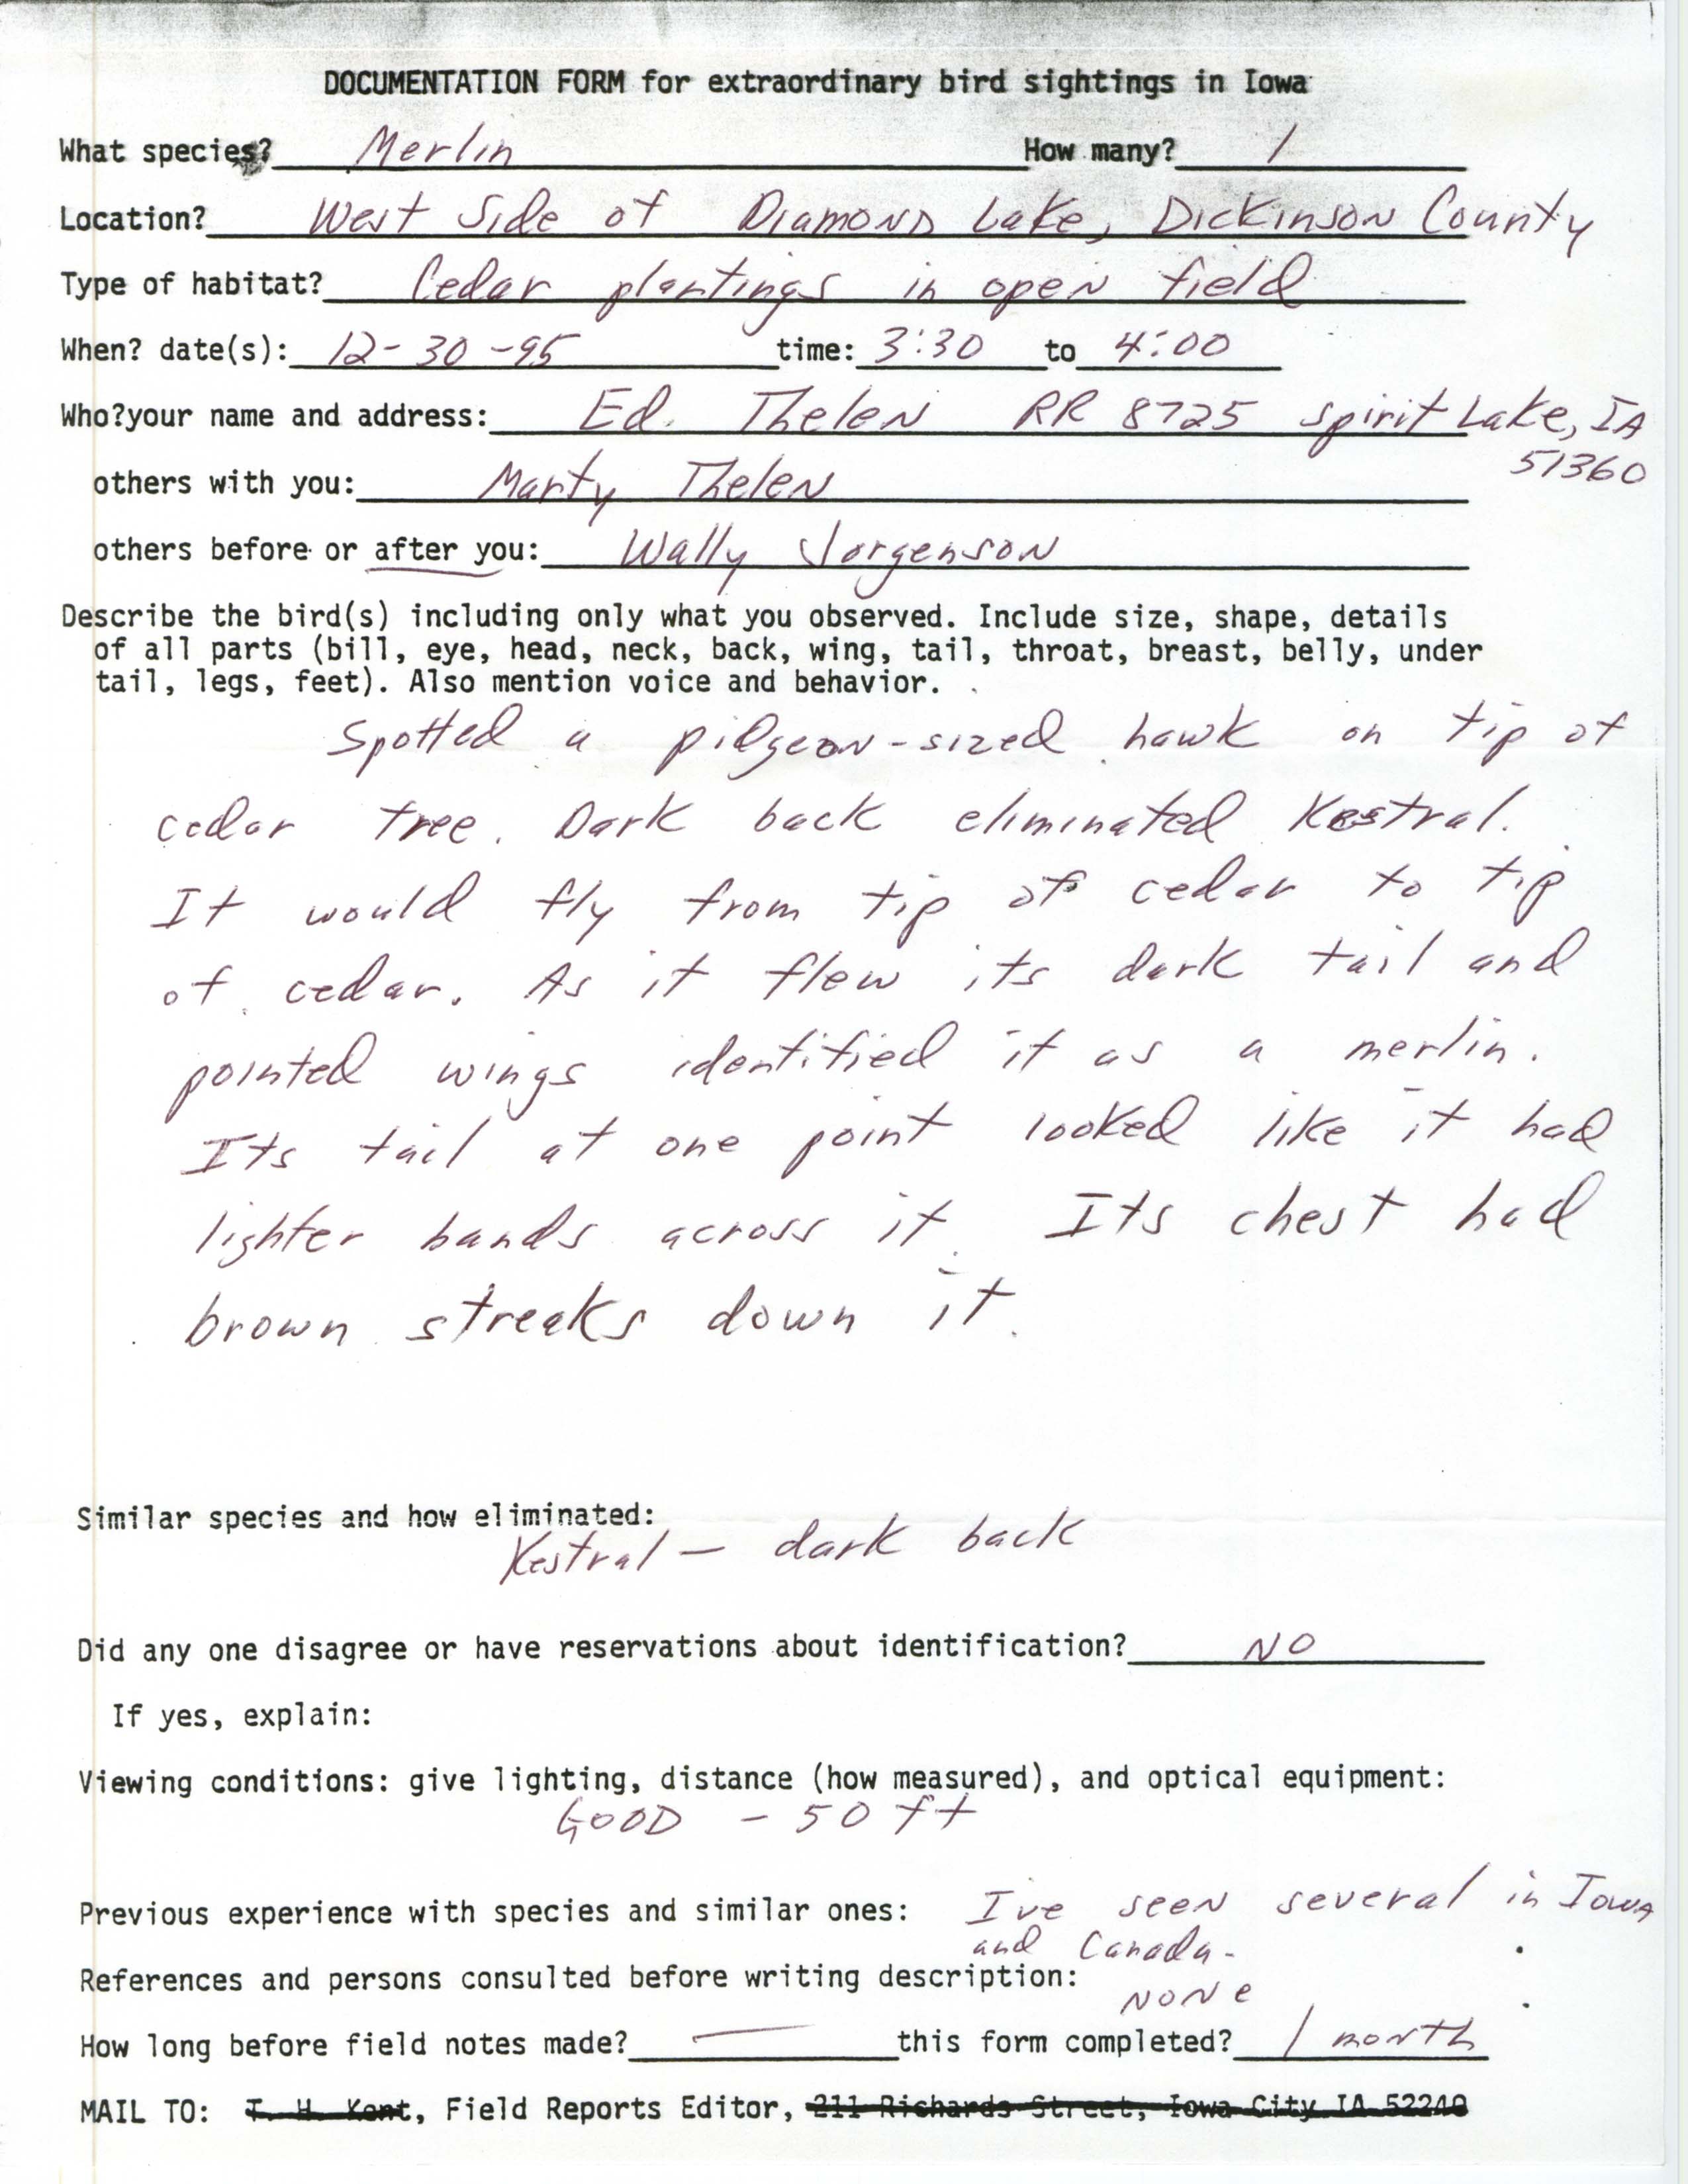 Rare bird documentation form for Merlin at Diamond Lake, 1995